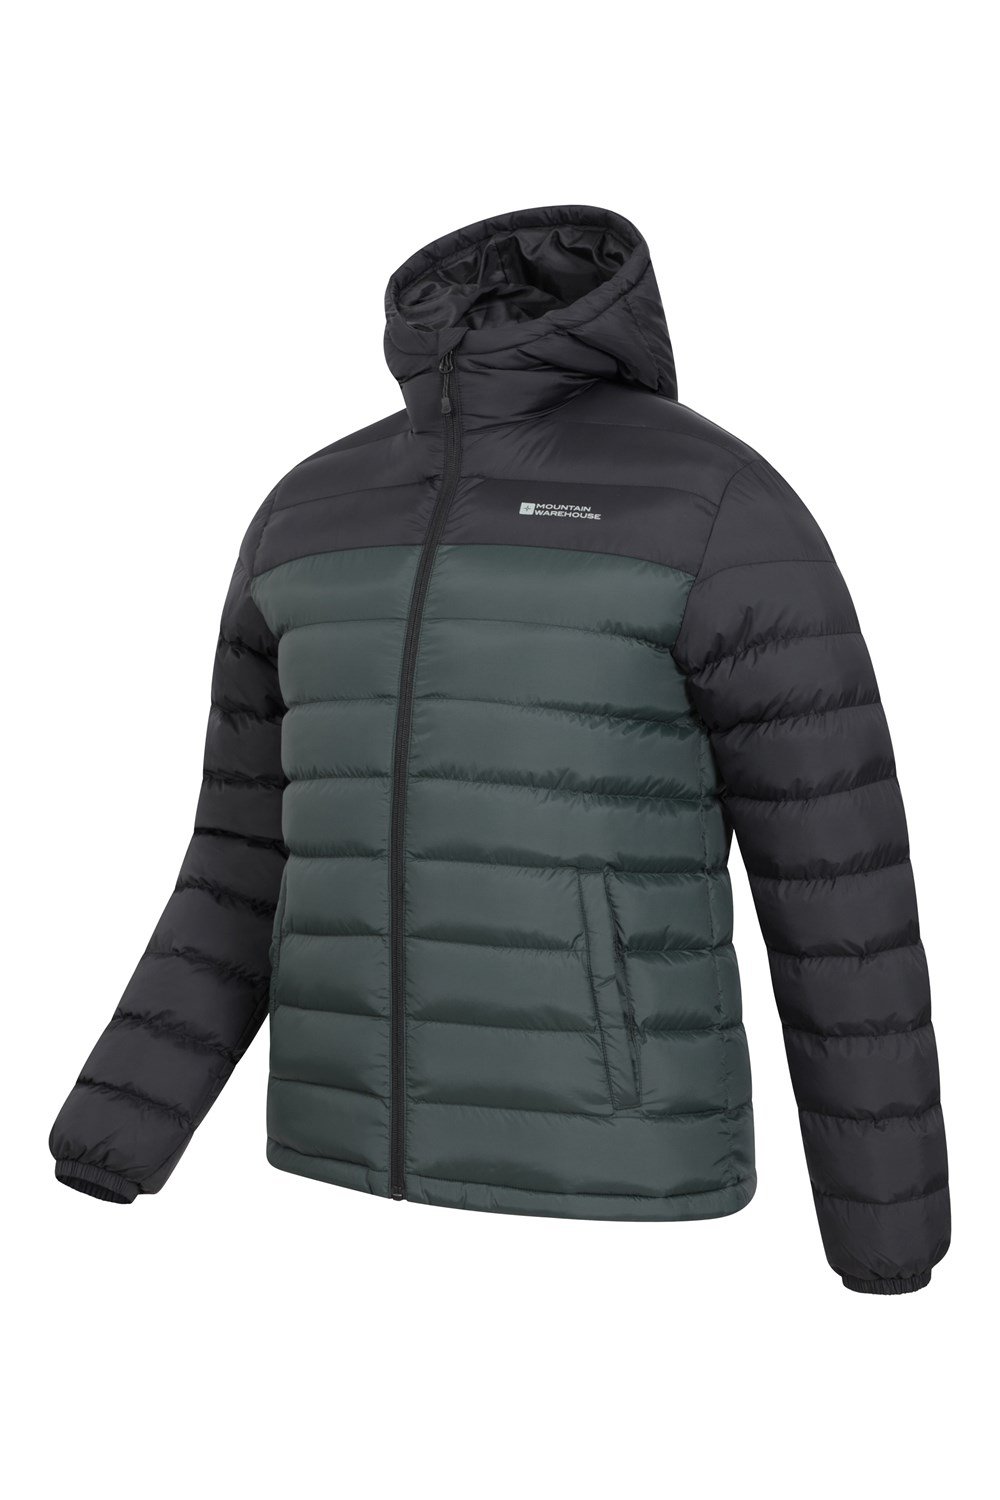 Mountain Warehouse Seasons Men's Padded Warm Jacket Water Resistant ...